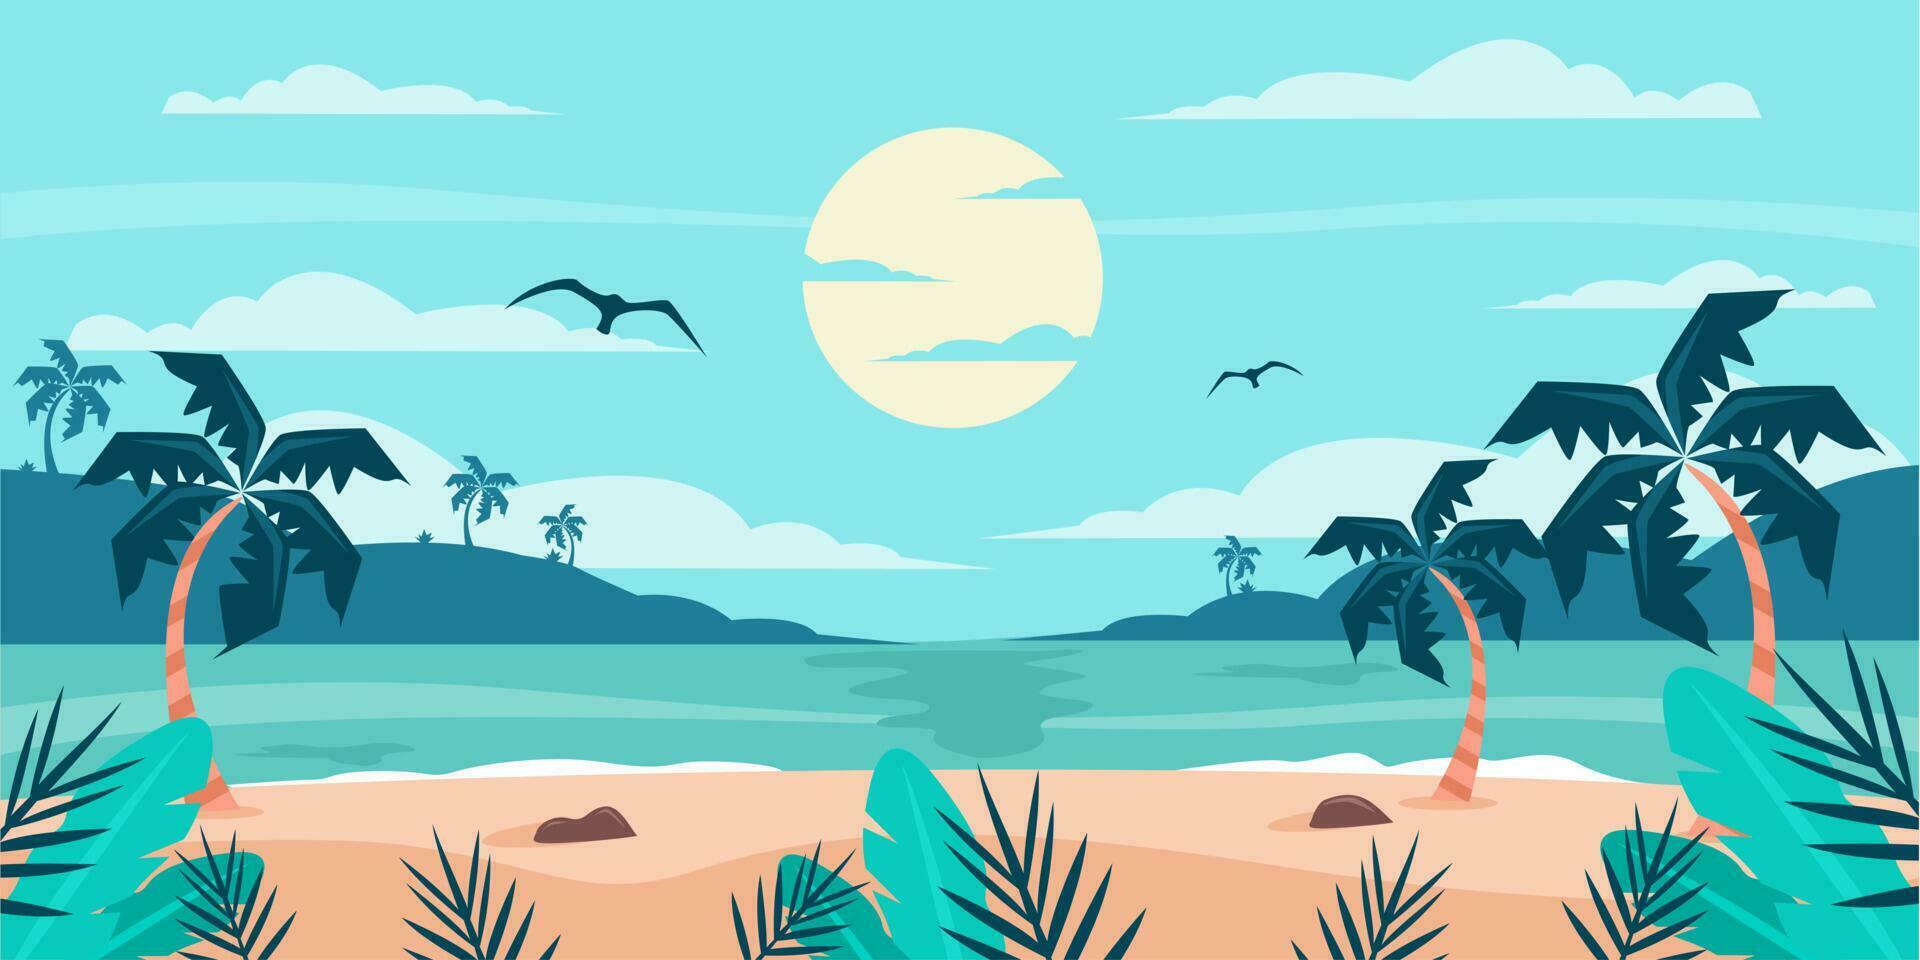 Summer beach background vector